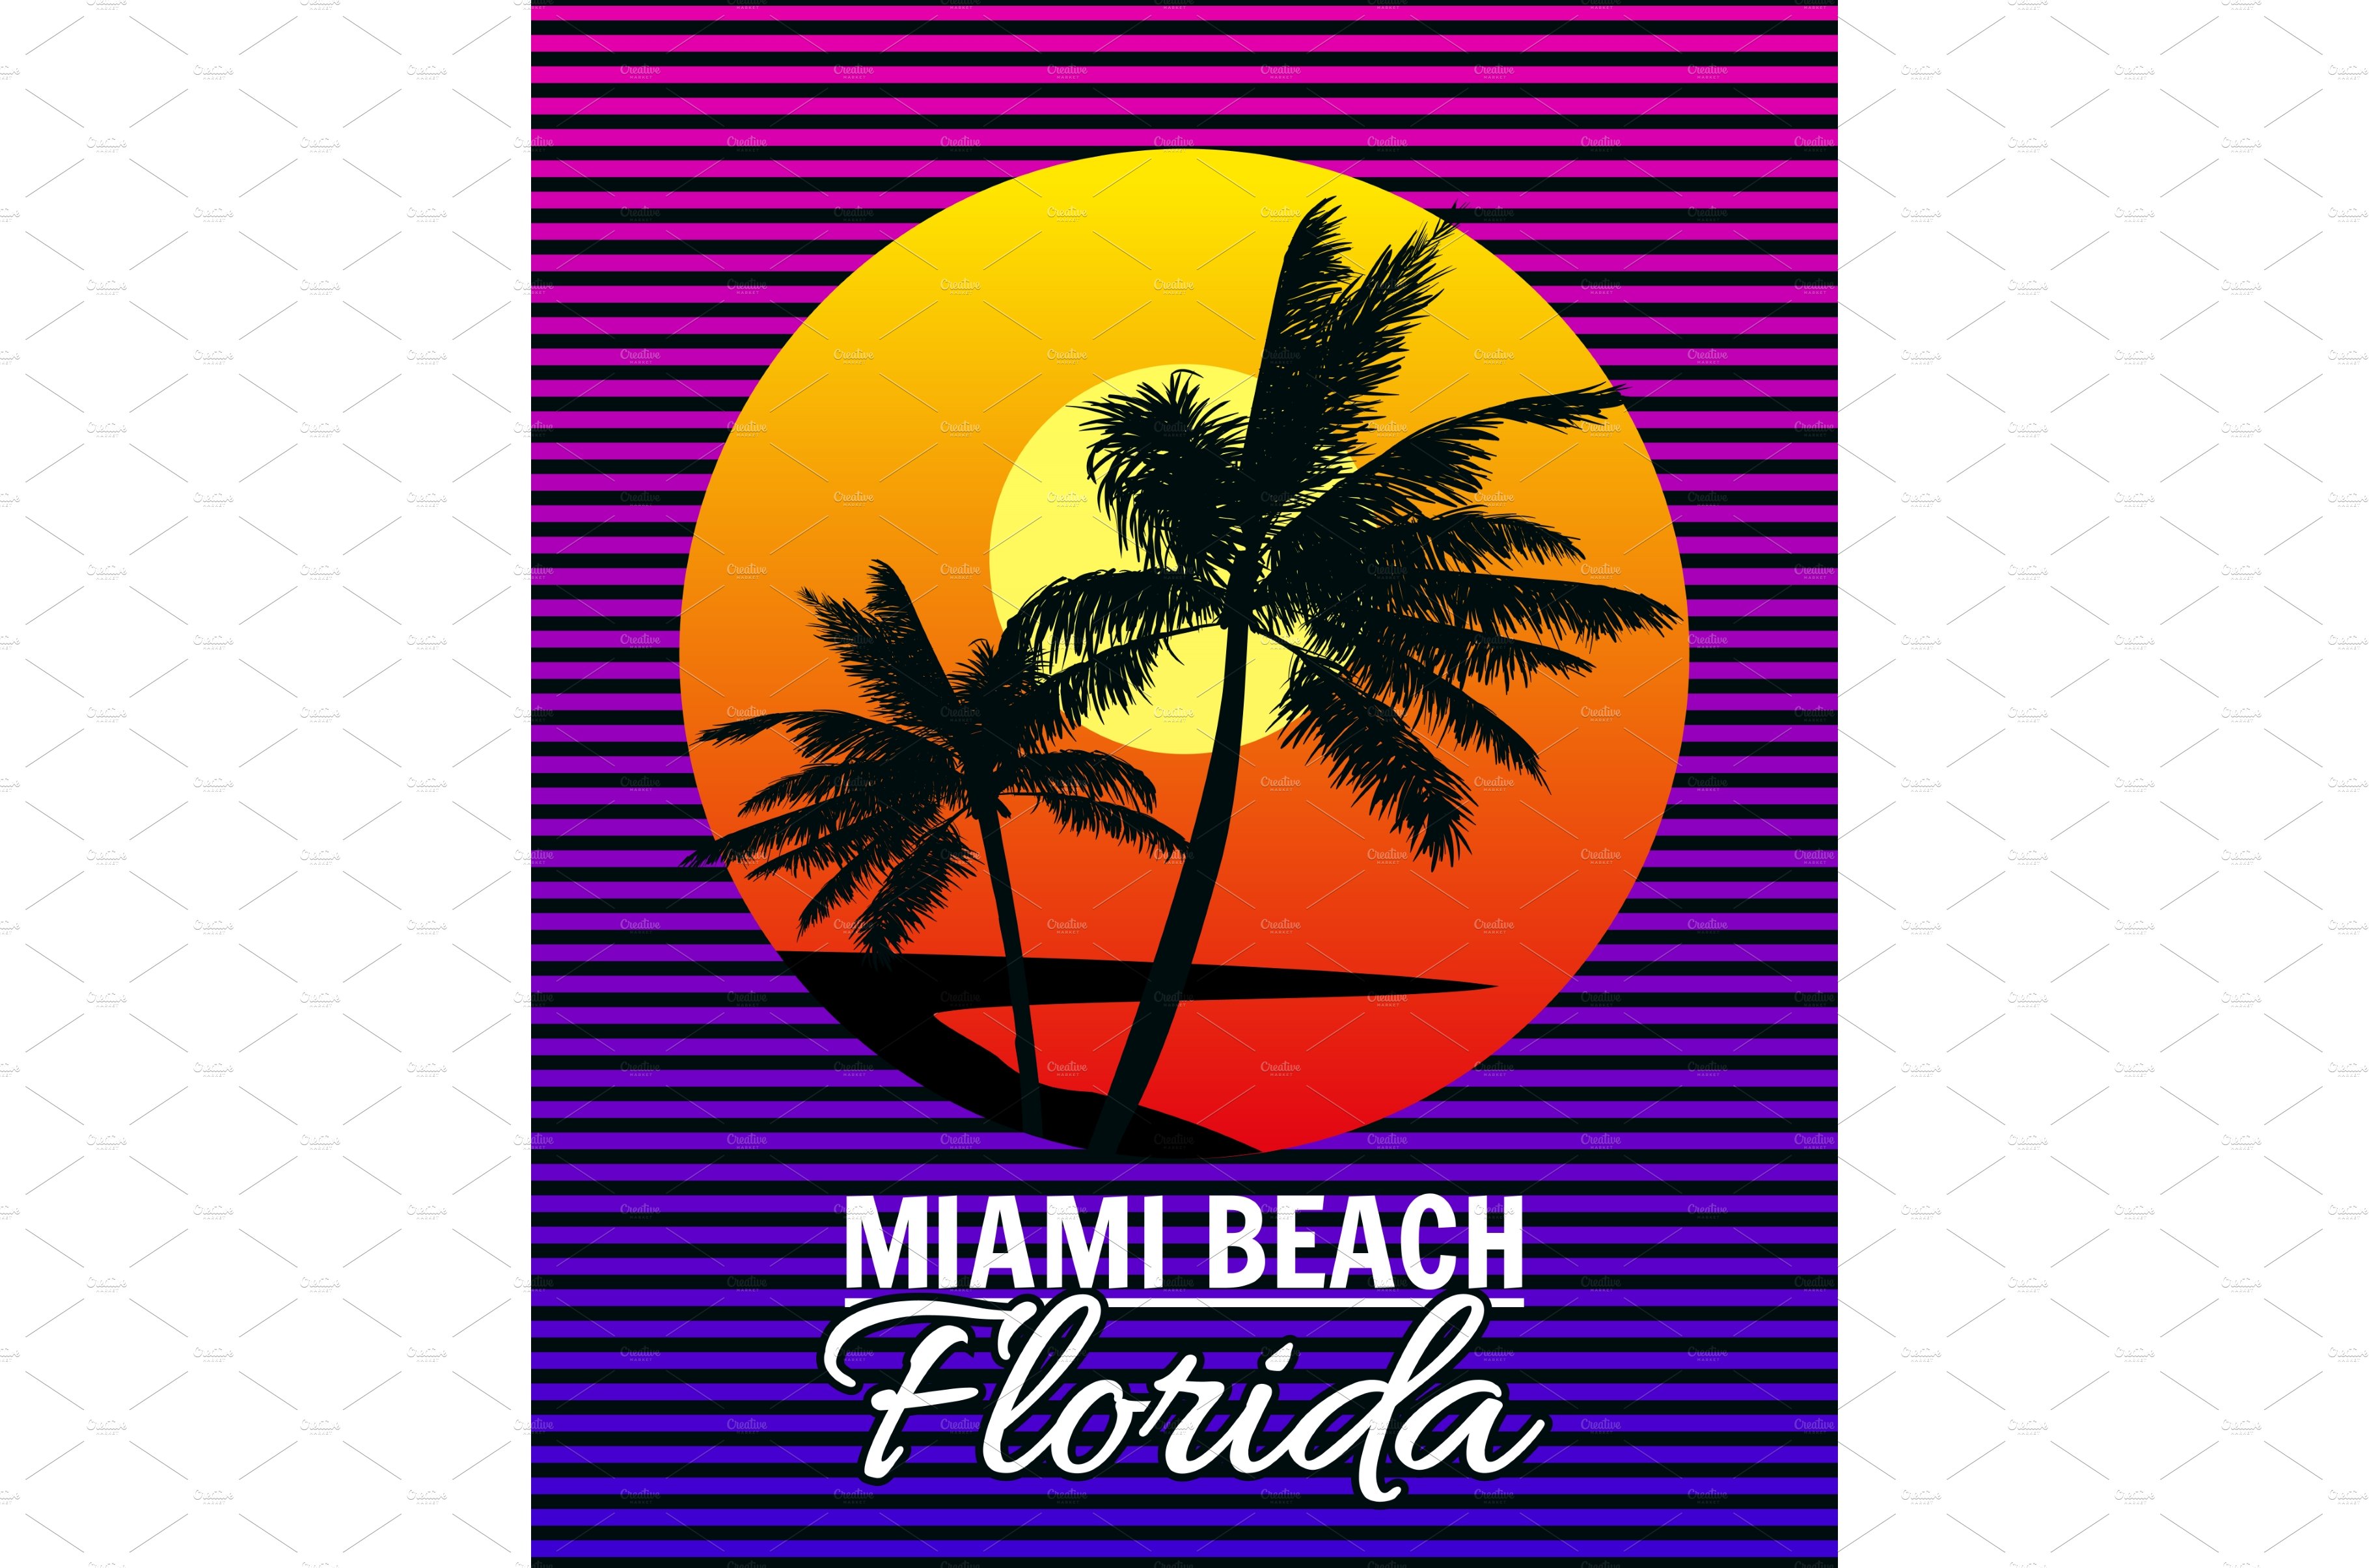 Sunset Florida Miami Beach summer cover image.